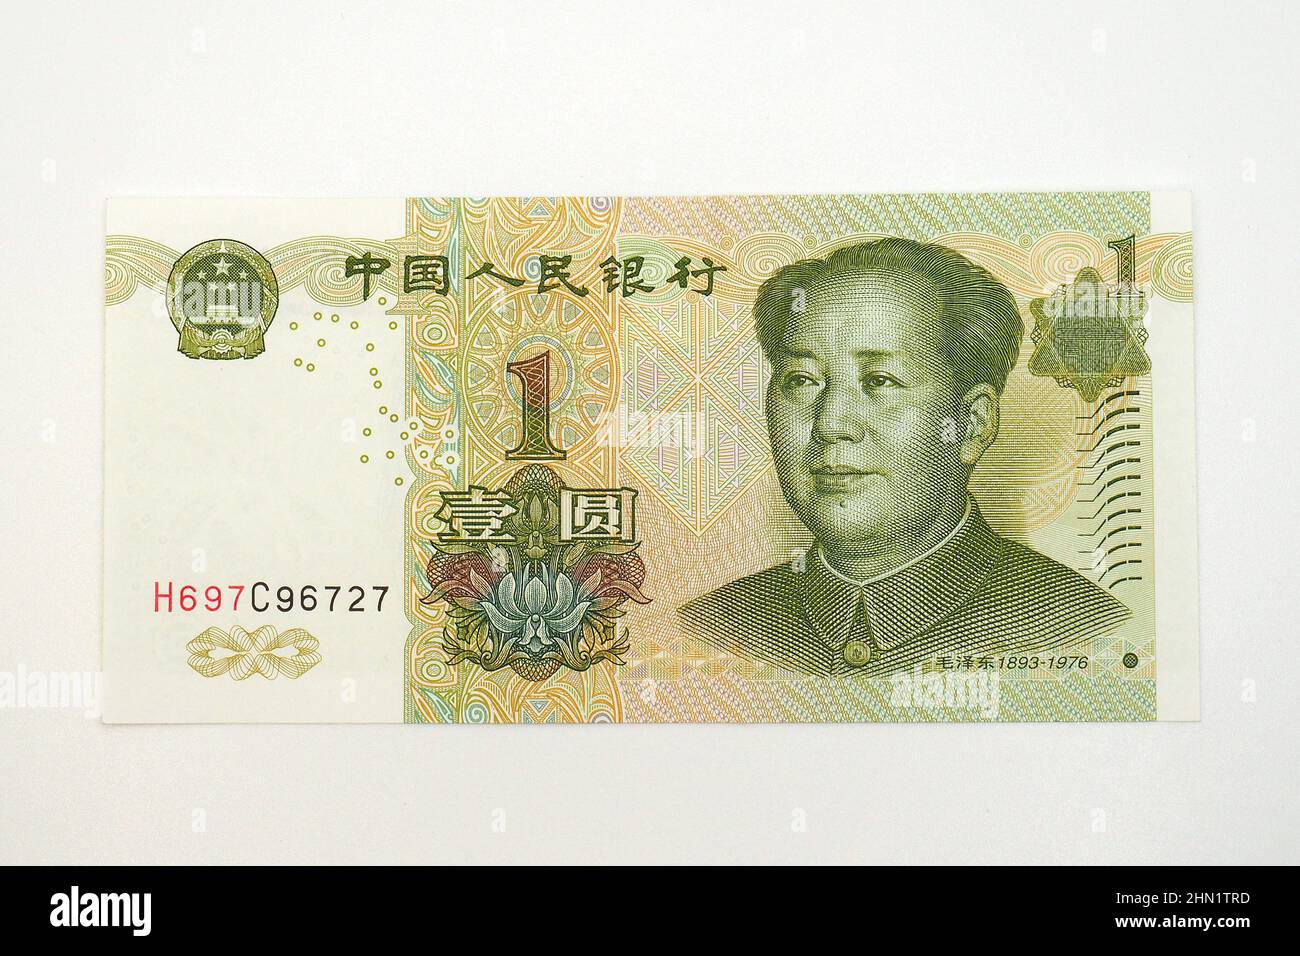 5 X 2015 CHINA 100 YUAN MAO CHINESE CURRENCY RMB MONEY BANKNOTE CIRCULATE MINT